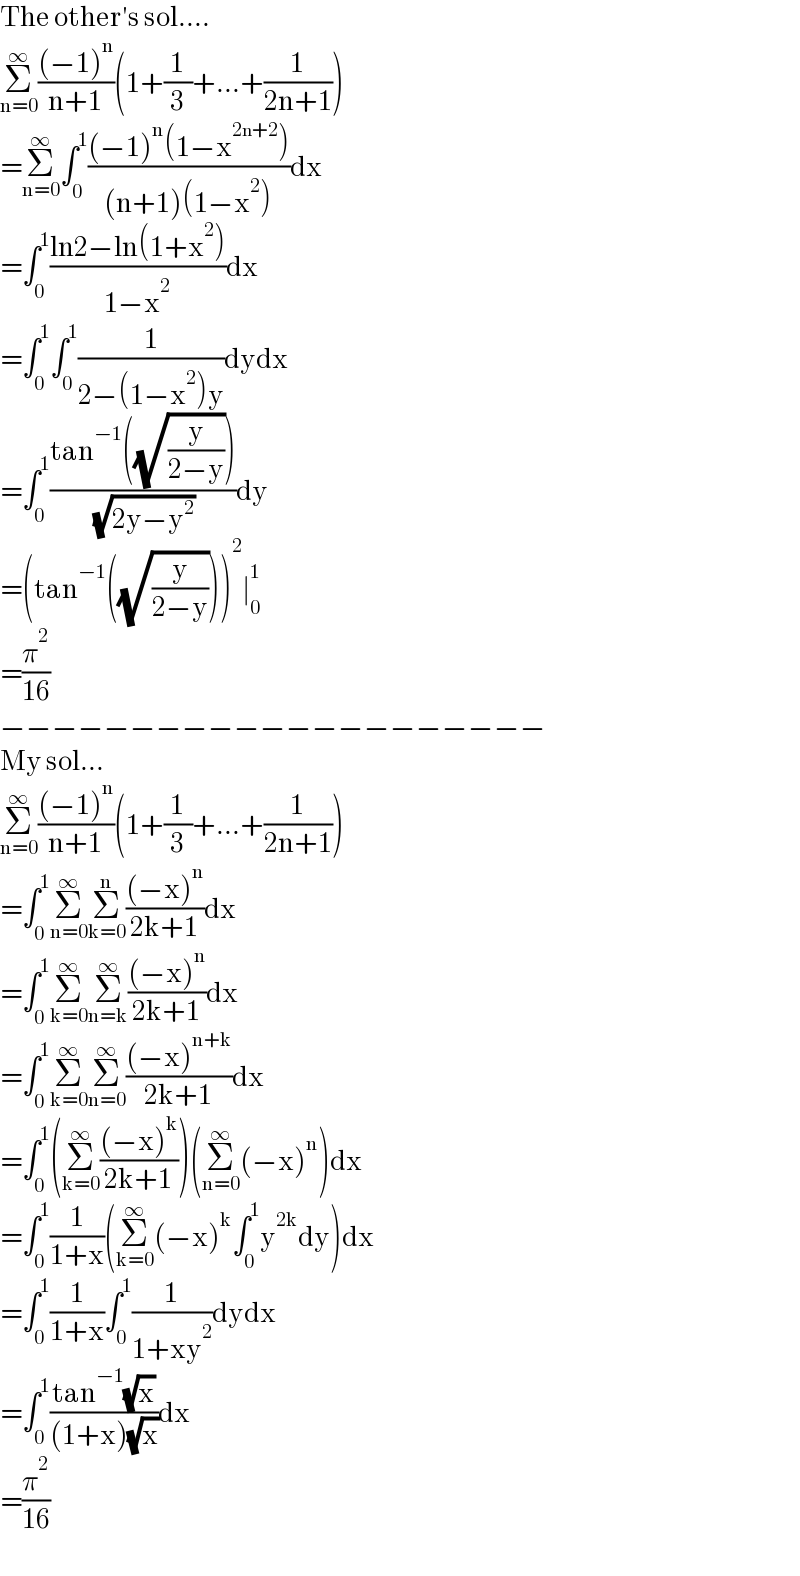 The other′s sol....  Σ_(n=0) ^∞ (((−1)^n )/(n+1))(1+(1/3)+...+(1/(2n+1)))  =Σ_(n=0) ^∞ ∫_0 ^1 (((−1)^n (1−x^(2n+2) ))/((n+1)(1−x^2 )))dx  =∫_0 ^1 ((ln2−ln(1+x^2 ))/(1−x^2 ))dx  =∫_0 ^1 ∫_0 ^1 (1/(2−(1−x^2 )y))dydx  =∫_0 ^1 ((tan^(−1) ((√(y/(2−y)))))/( (√(2y−y^2 ))))dy  =(tan^(−1) ((√(y/(2−y)))))^2 ∣_0 ^1   =(π^2 /(16))  −−−−−−−−−−−−−−−−−−−−−  My sol...  Σ_(n=0) ^∞ (((−1)^n )/(n+1))(1+(1/3)+...+(1/(2n+1)))  =∫_0 ^1 Σ_(n=0) ^∞ Σ_(k=0) ^n (((−x)^n )/(2k+1))dx  =∫_0 ^1 Σ_(k=0) ^∞ Σ_(n=k) ^∞ (((−x)^n )/(2k+1))dx  =∫_0 ^1 Σ_(k=0) ^∞ Σ_(n=0) ^∞ (((−x)^(n+k) )/(2k+1))dx  =∫_0 ^1 (Σ_(k=0) ^∞ (((−x)^k )/(2k+1)))(Σ_(n=0) ^∞ (−x)^n )dx  =∫_0 ^1 (1/(1+x))(Σ_(k=0) ^∞ (−x)^k ∫_0 ^1 y^(2k) dy)dx  =∫_0 ^1 (1/(1+x))∫_0 ^1 (1/(1+xy^2 ))dydx  =∫_0 ^1 ((tan^(−1) (√x))/((1+x)(√x)))dx  =(π^2 /(16))  